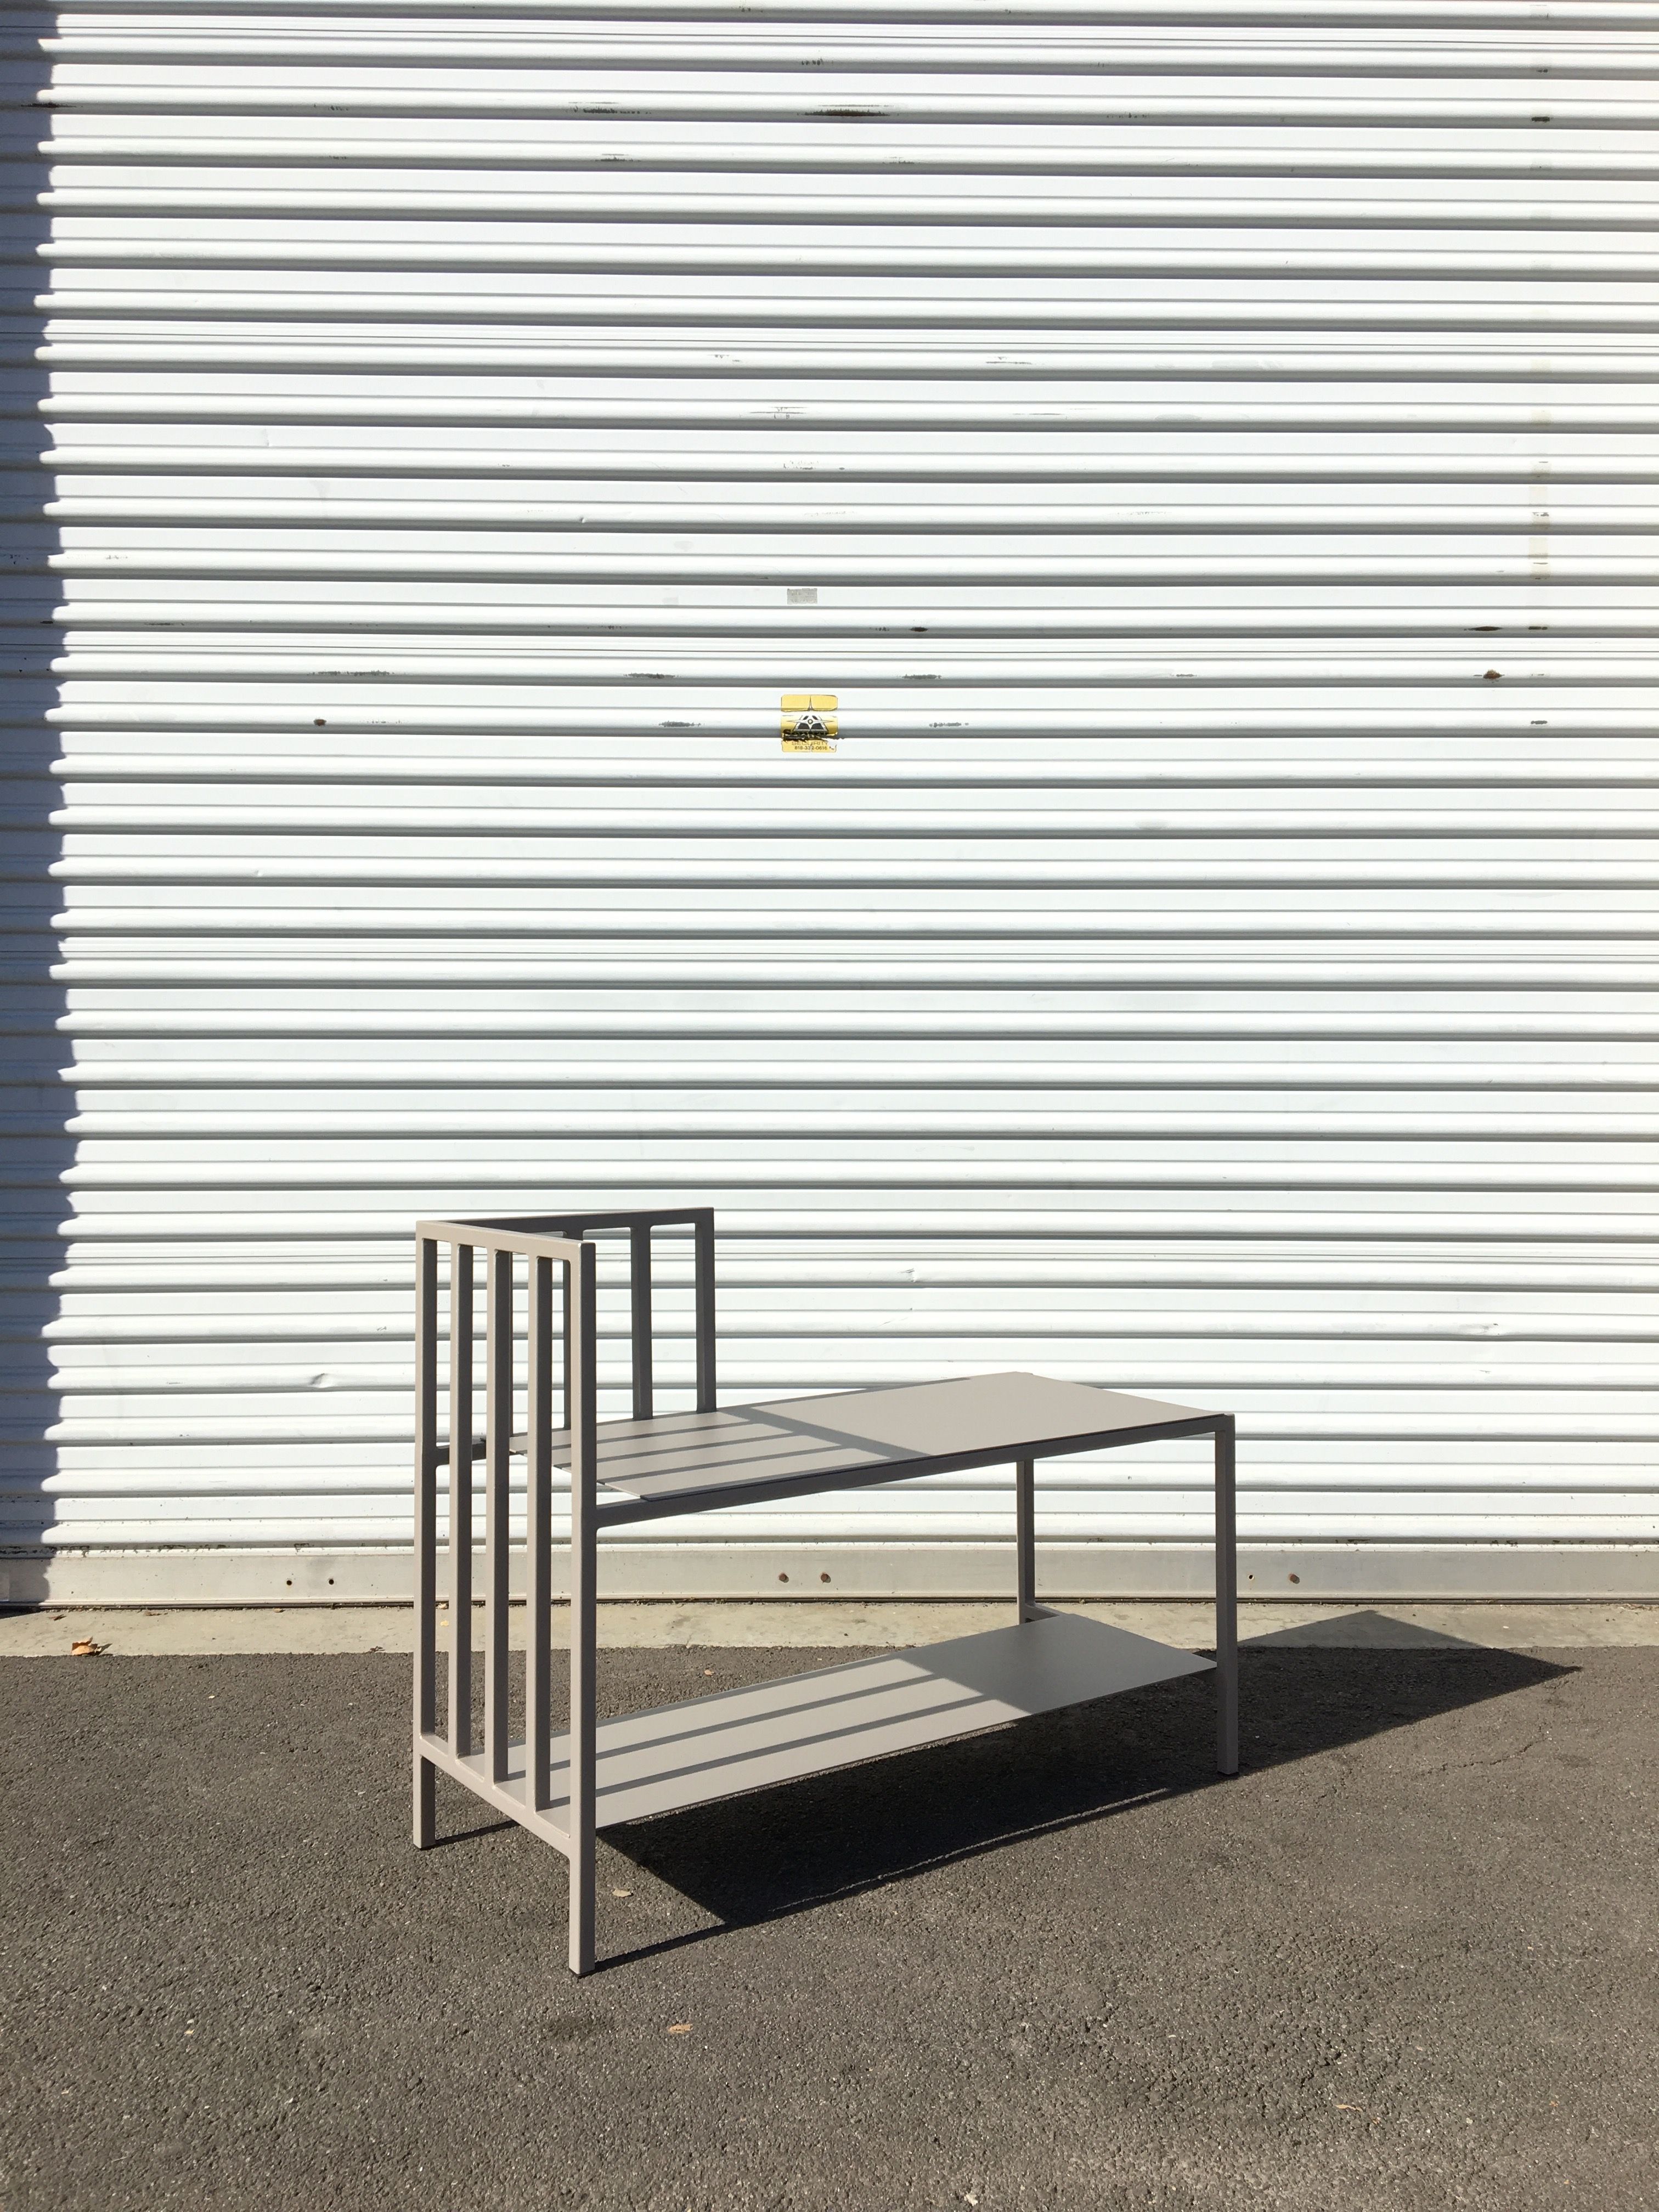  Display Benches - Baserange Kyoto product image 10